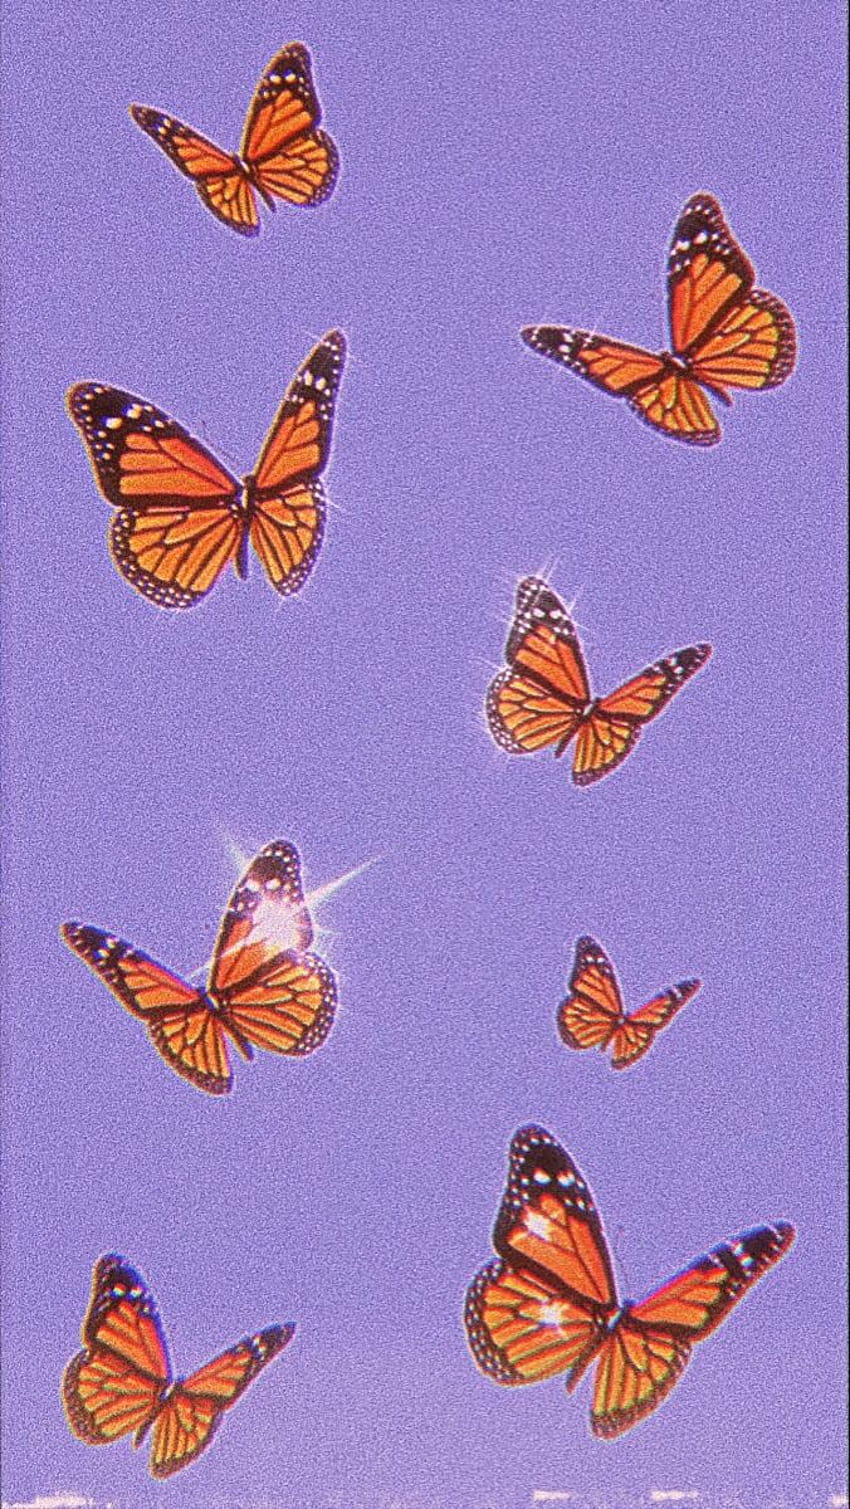 kupu-kupu oranye dan ungu wallpaper ponsel HD